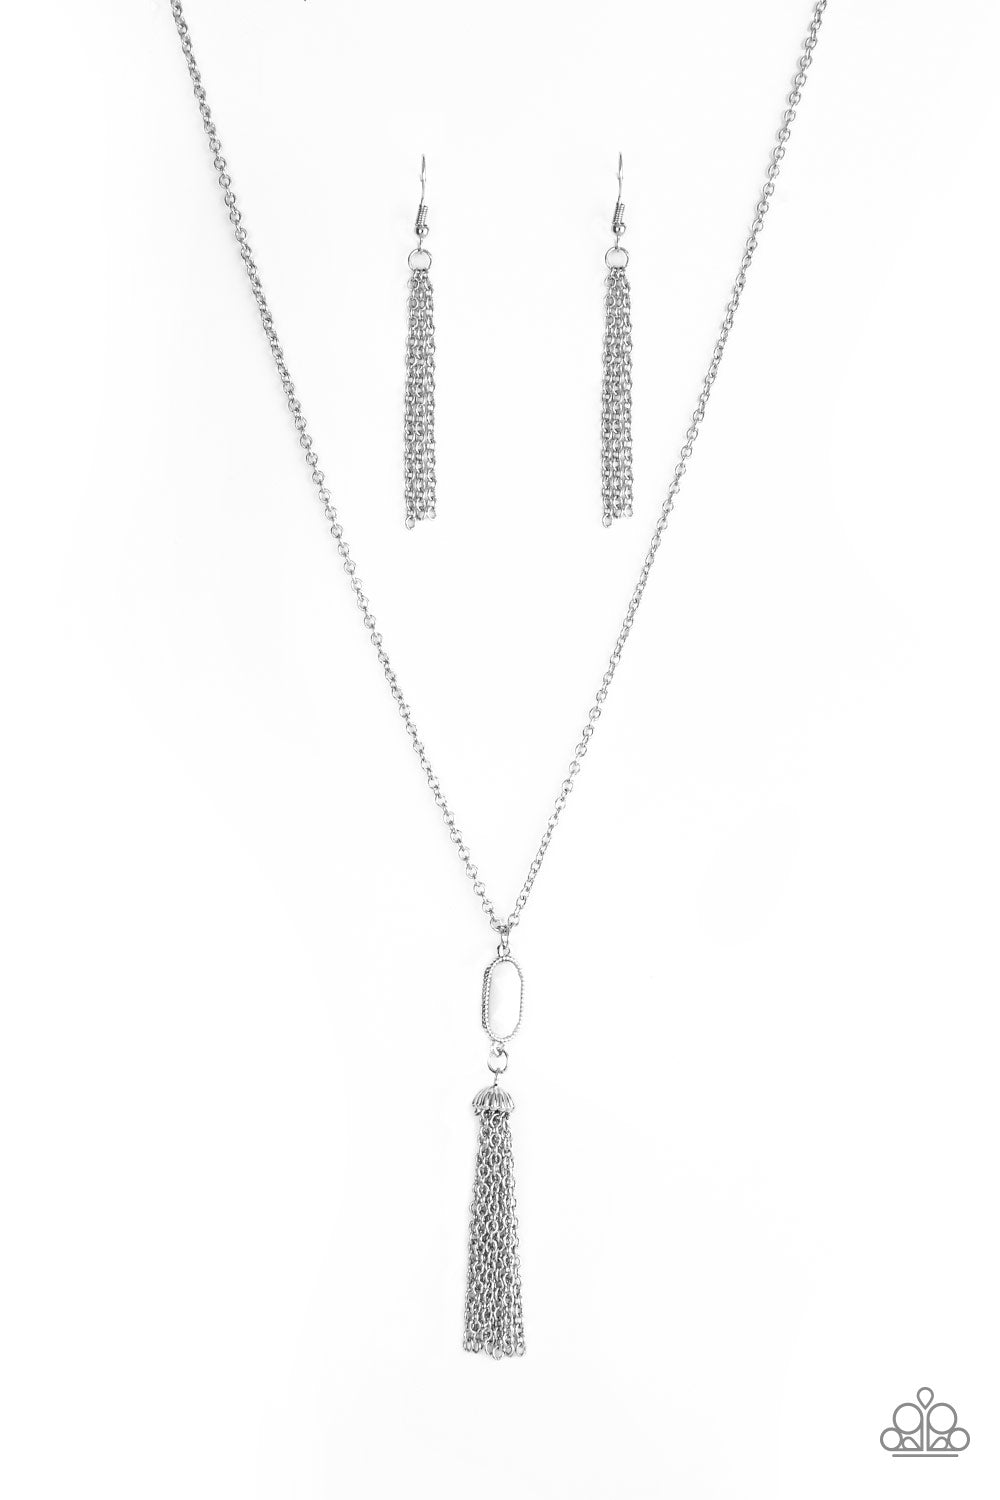 Tassel Tease - Paparazzi - White Pendant Silver Tassel Necklace